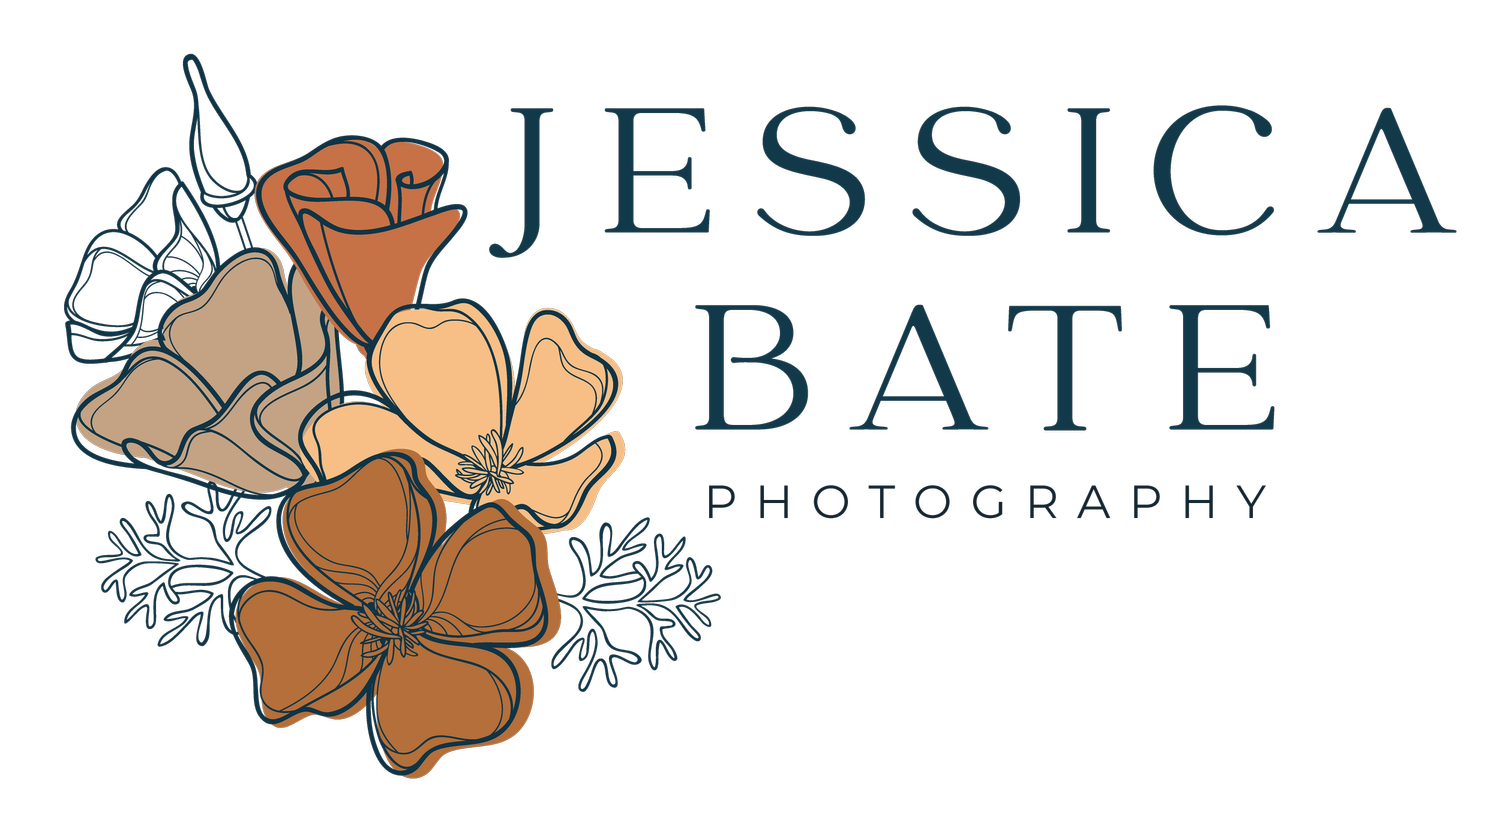 Jessica Bate Photography